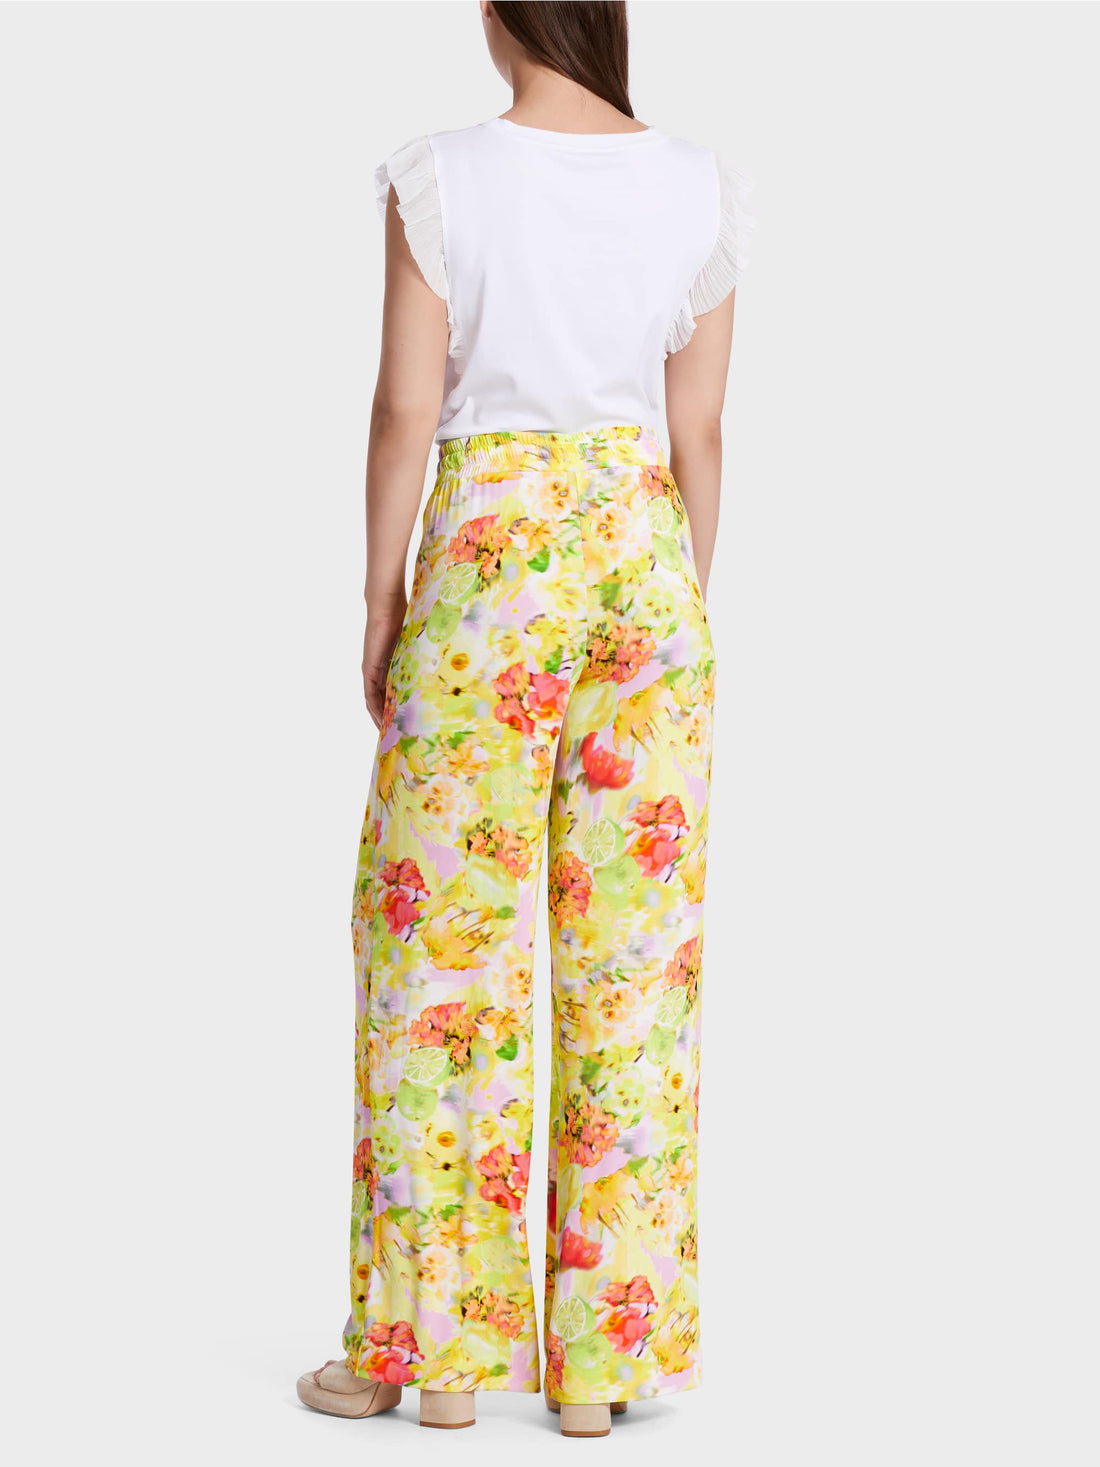 Wedi Pants In Floral Design_Wc 81.37 J22_420_02